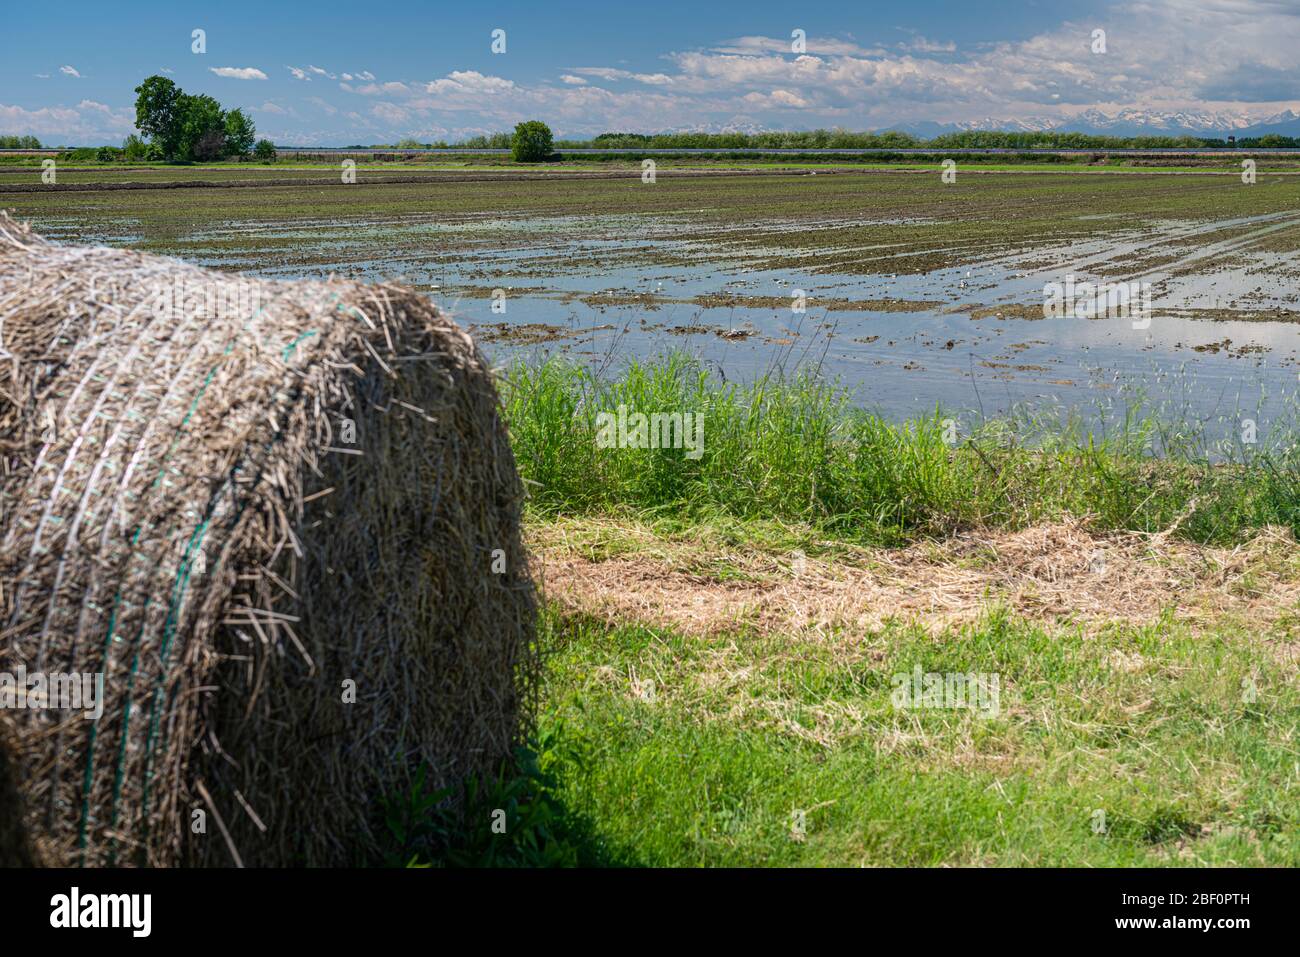 Close view of hay bale next to rice paddies in Ireland Stock Photo